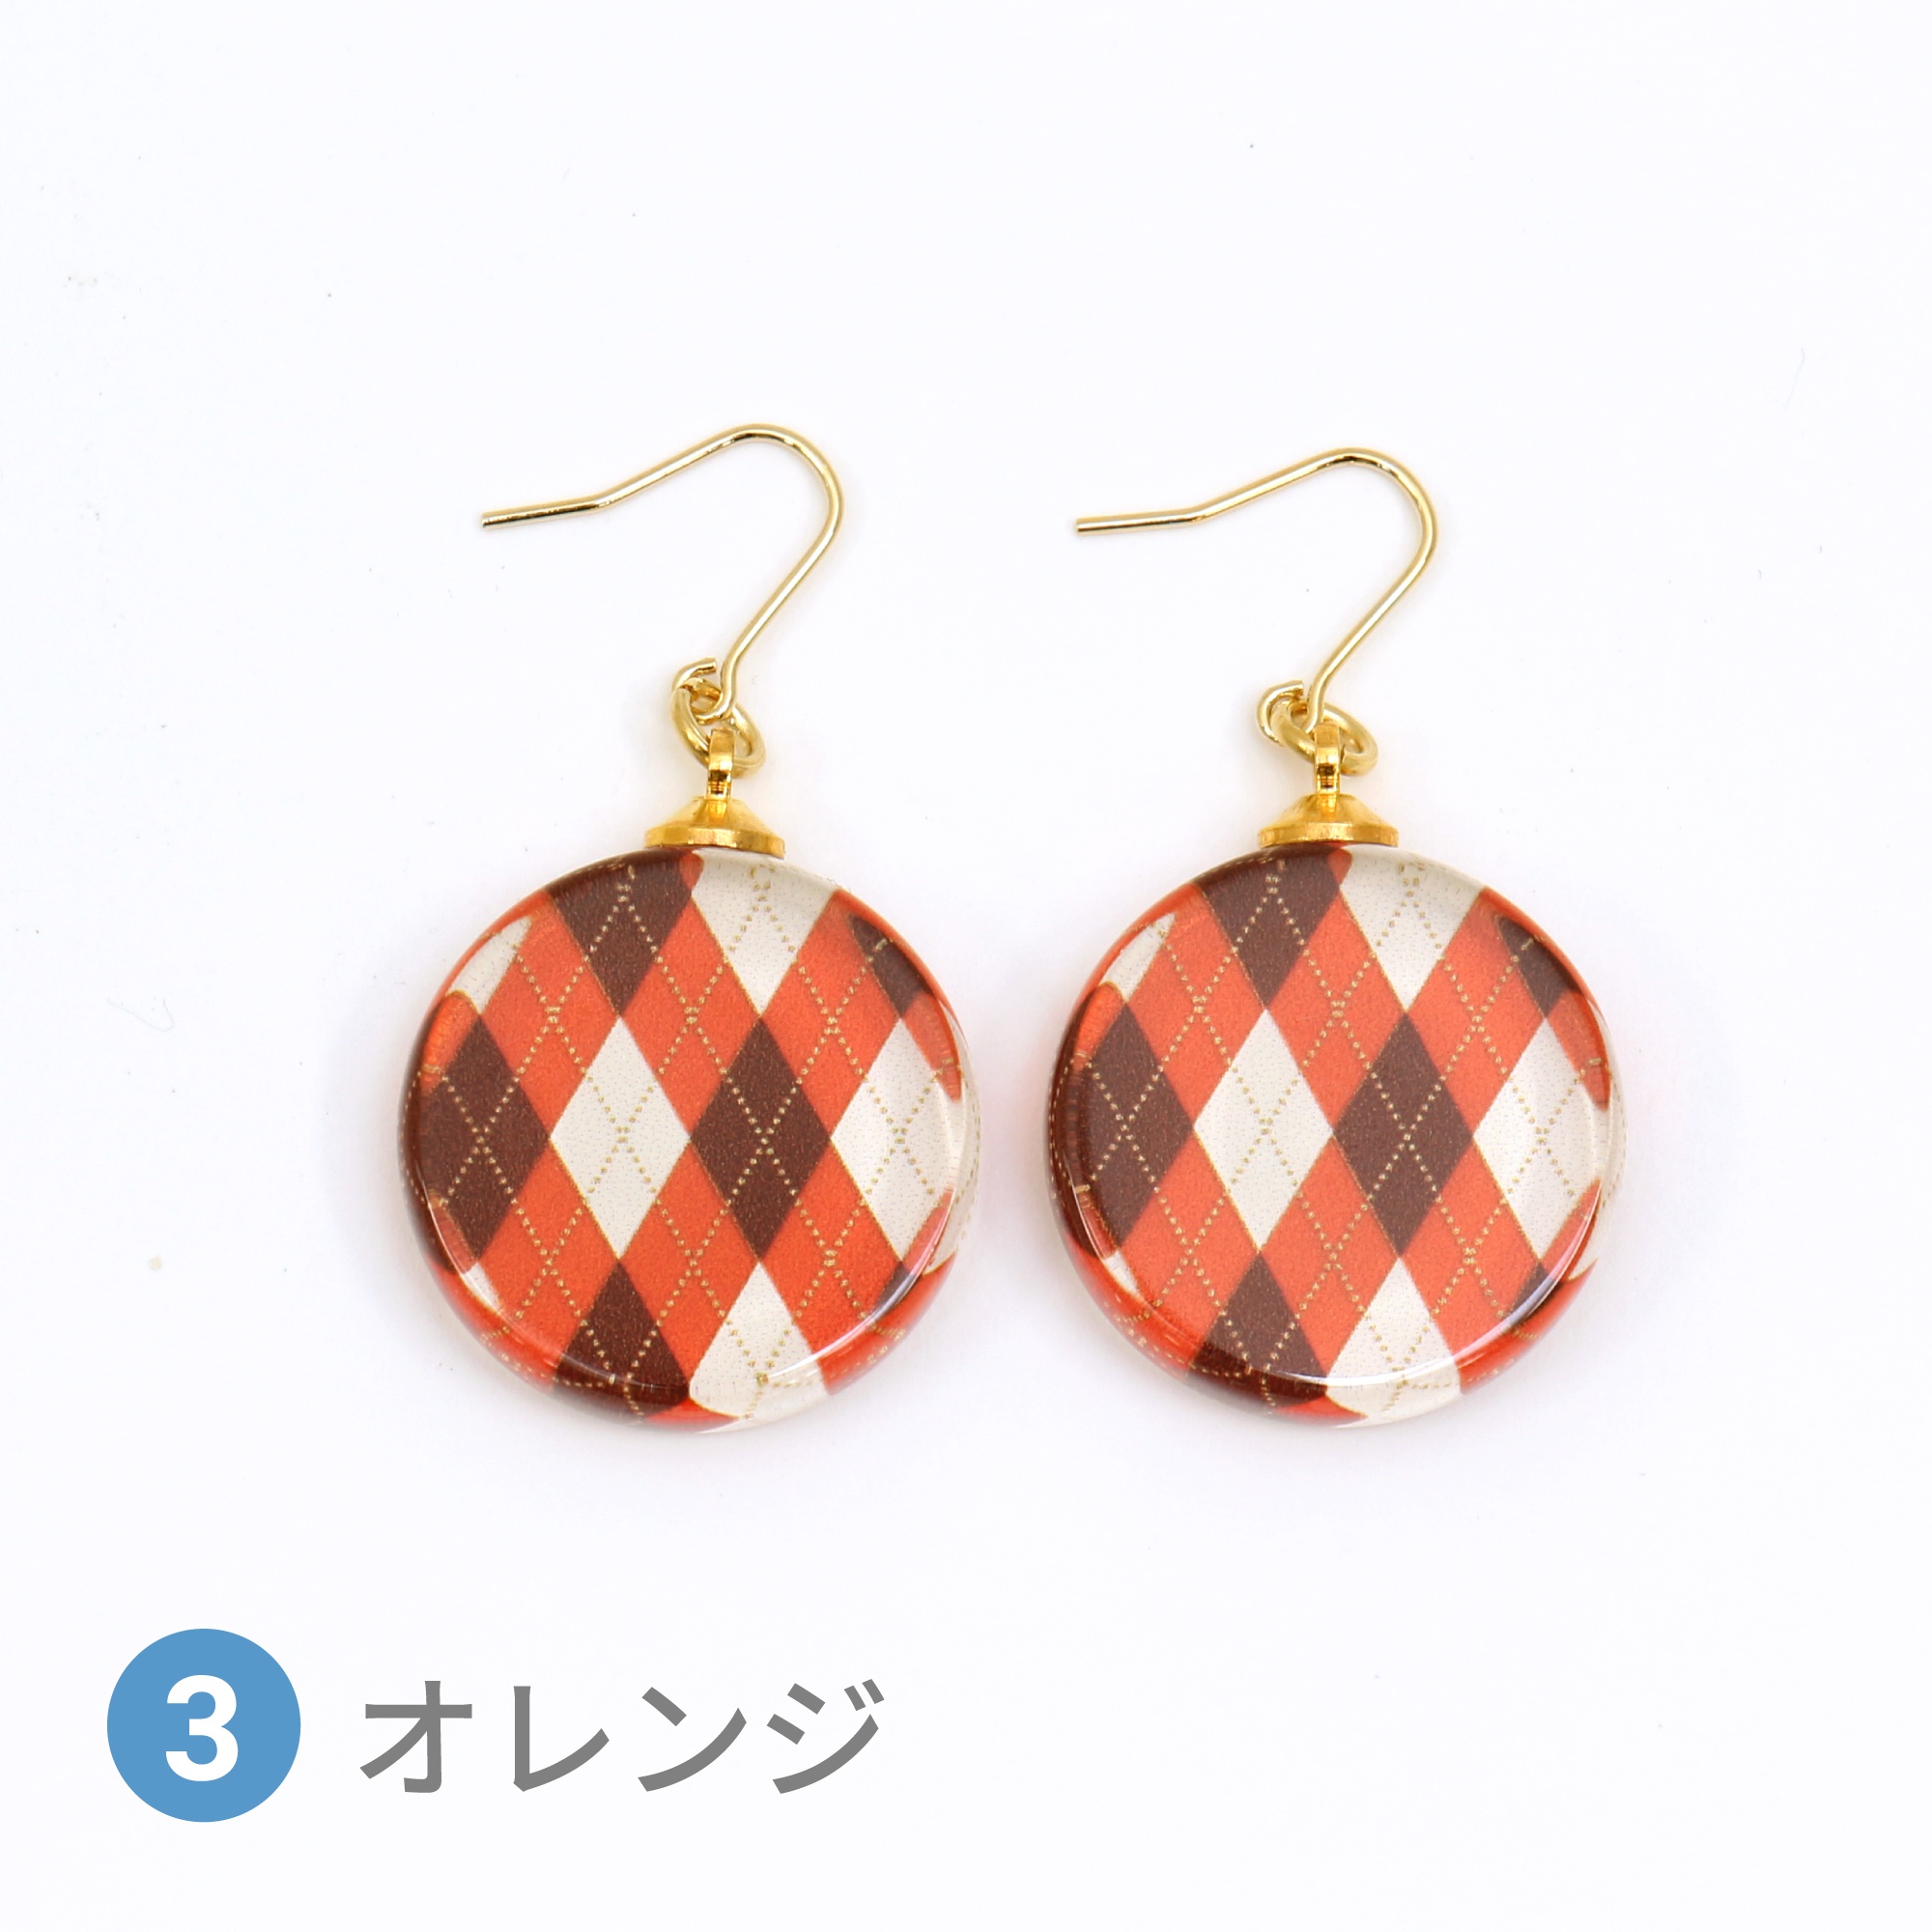 Glass accessories Pierced Earring ARGYLE orange round shape